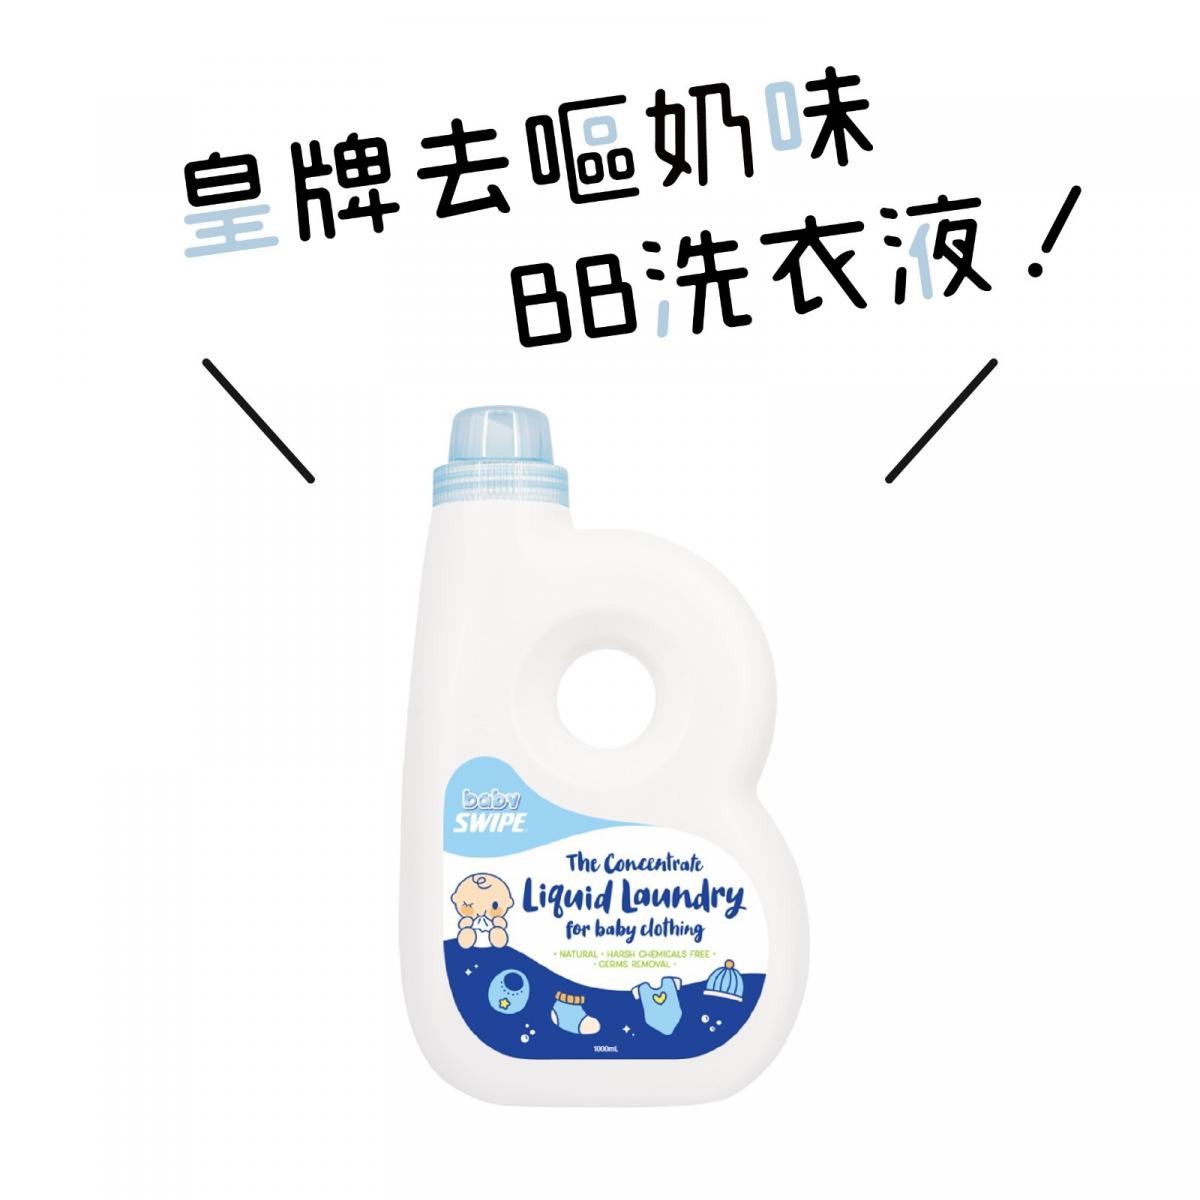 bb威寶嬰兒衣物濃縮洗劑1L(新舊包裝隨機發放)